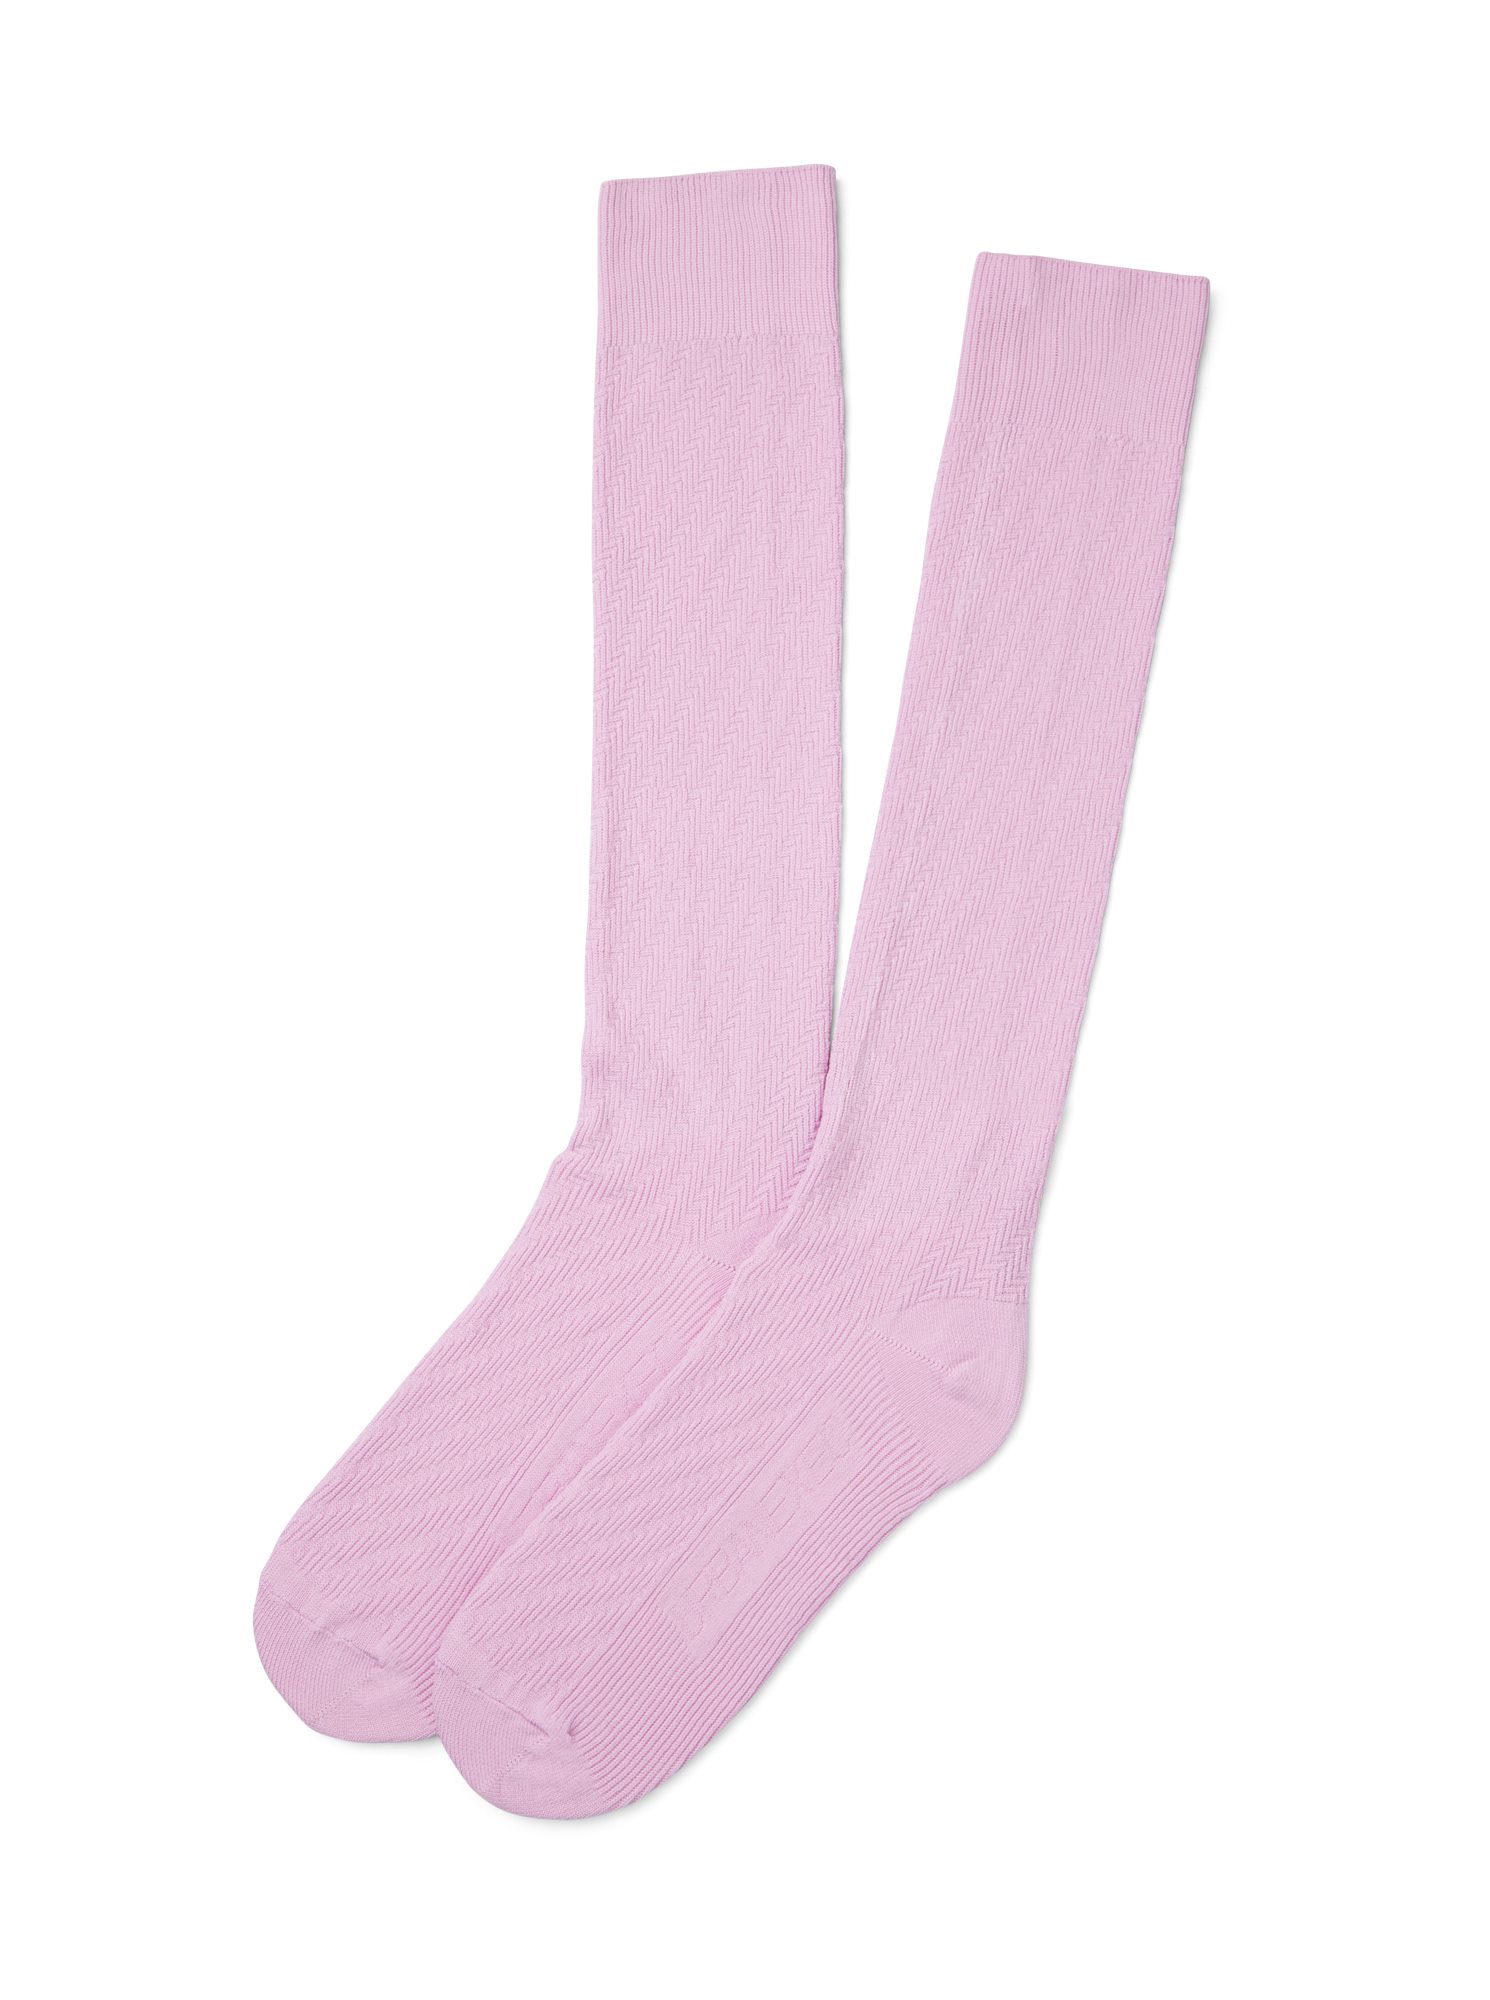 Urban Exec Tonal Herringbone Sock - Hot Pink | J.Hilburn